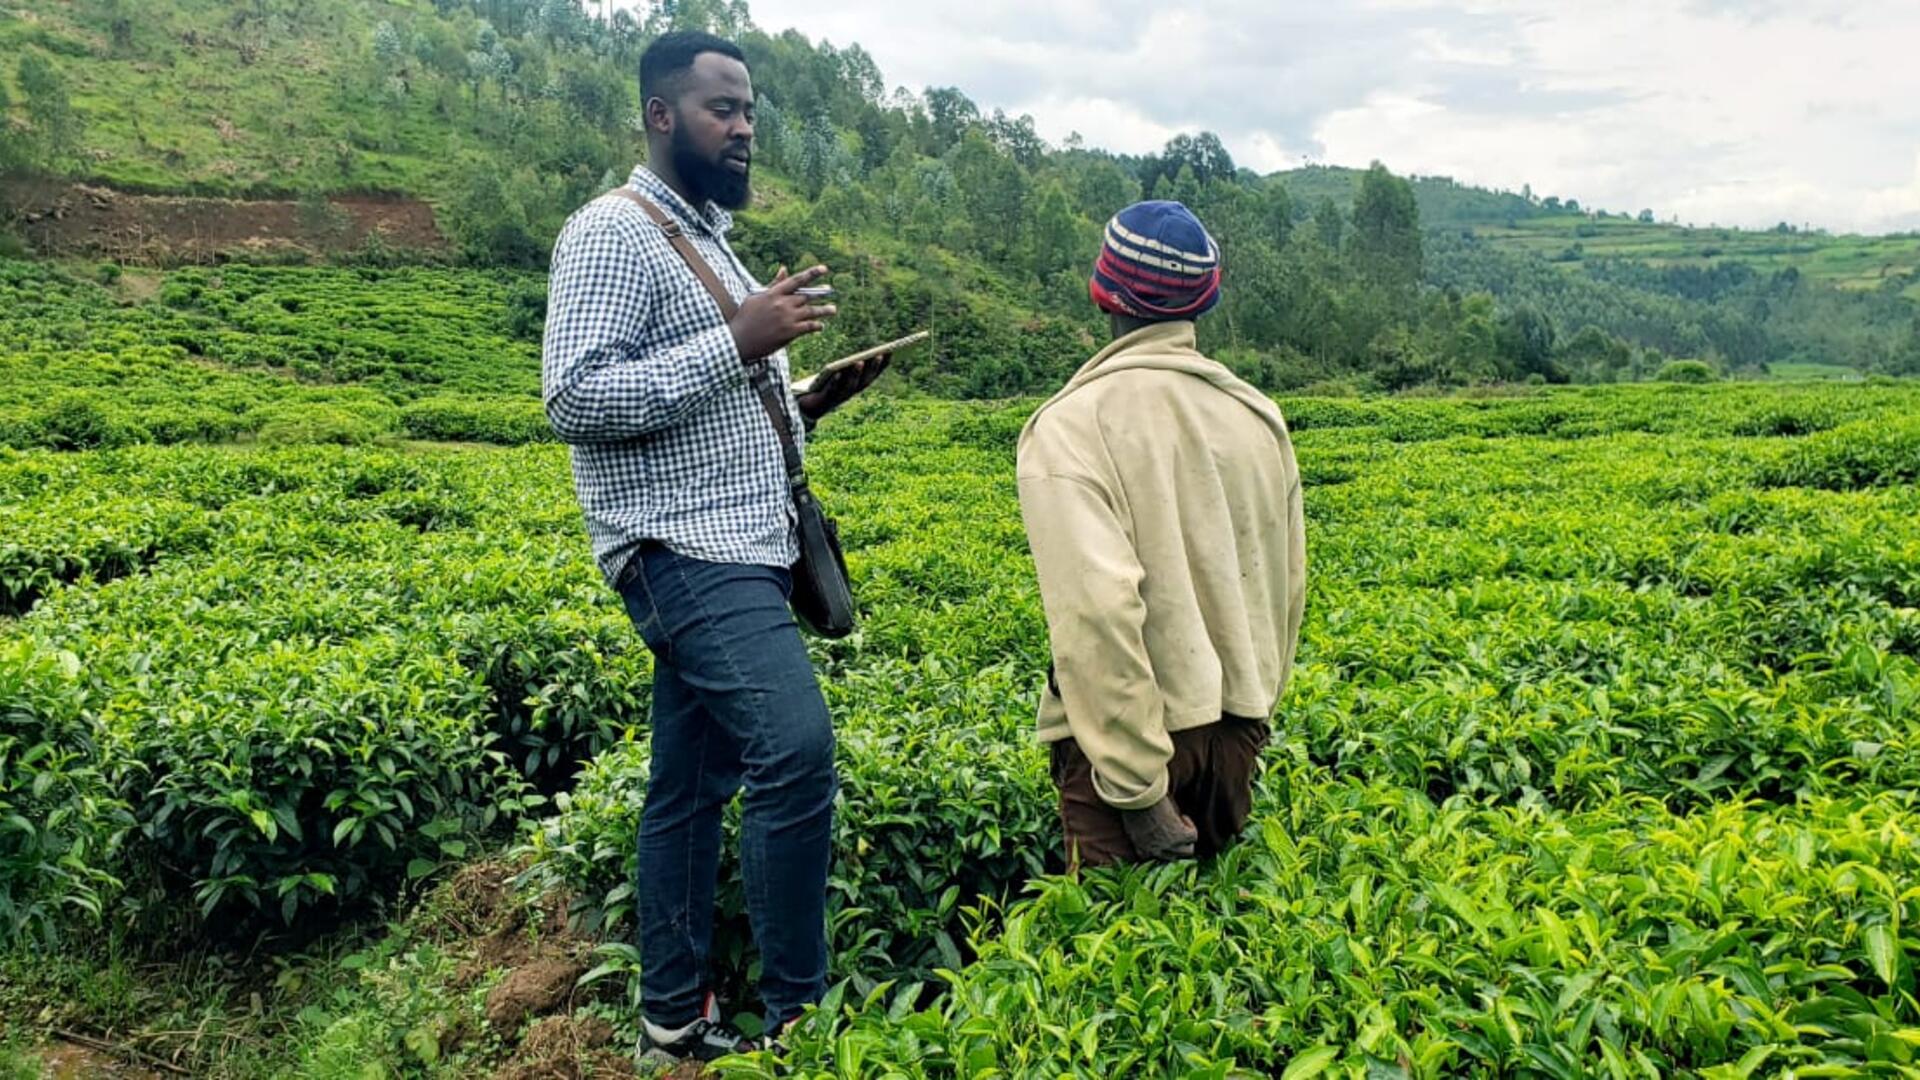 Rwandan farmers chatting in a field.